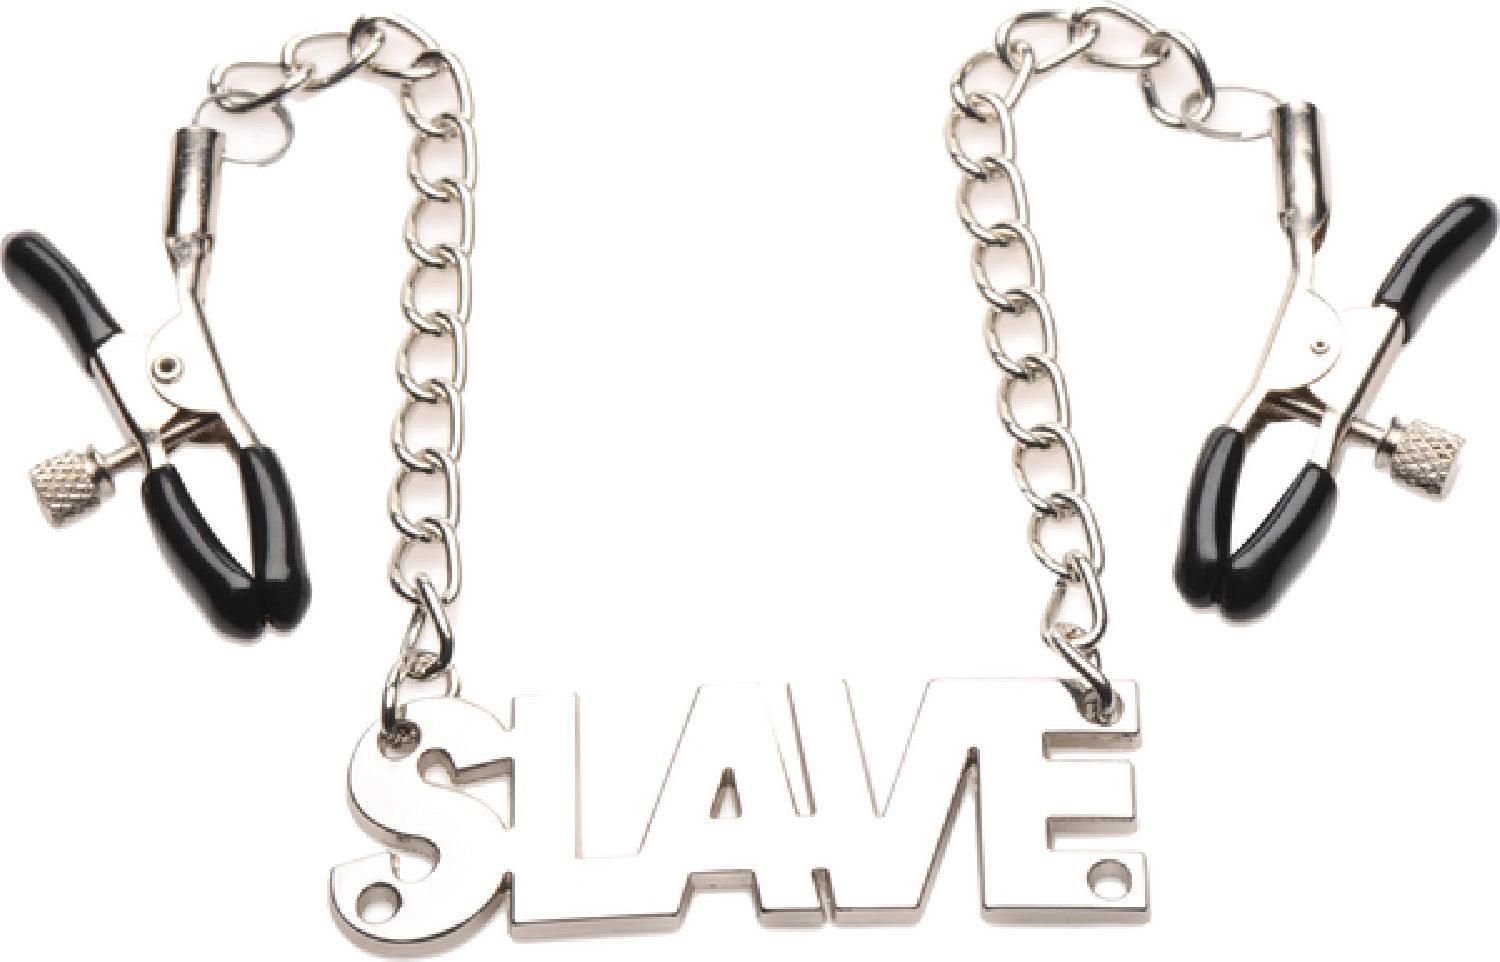 Enslaved Slave Chain Nipple Clamps - Take A Peek